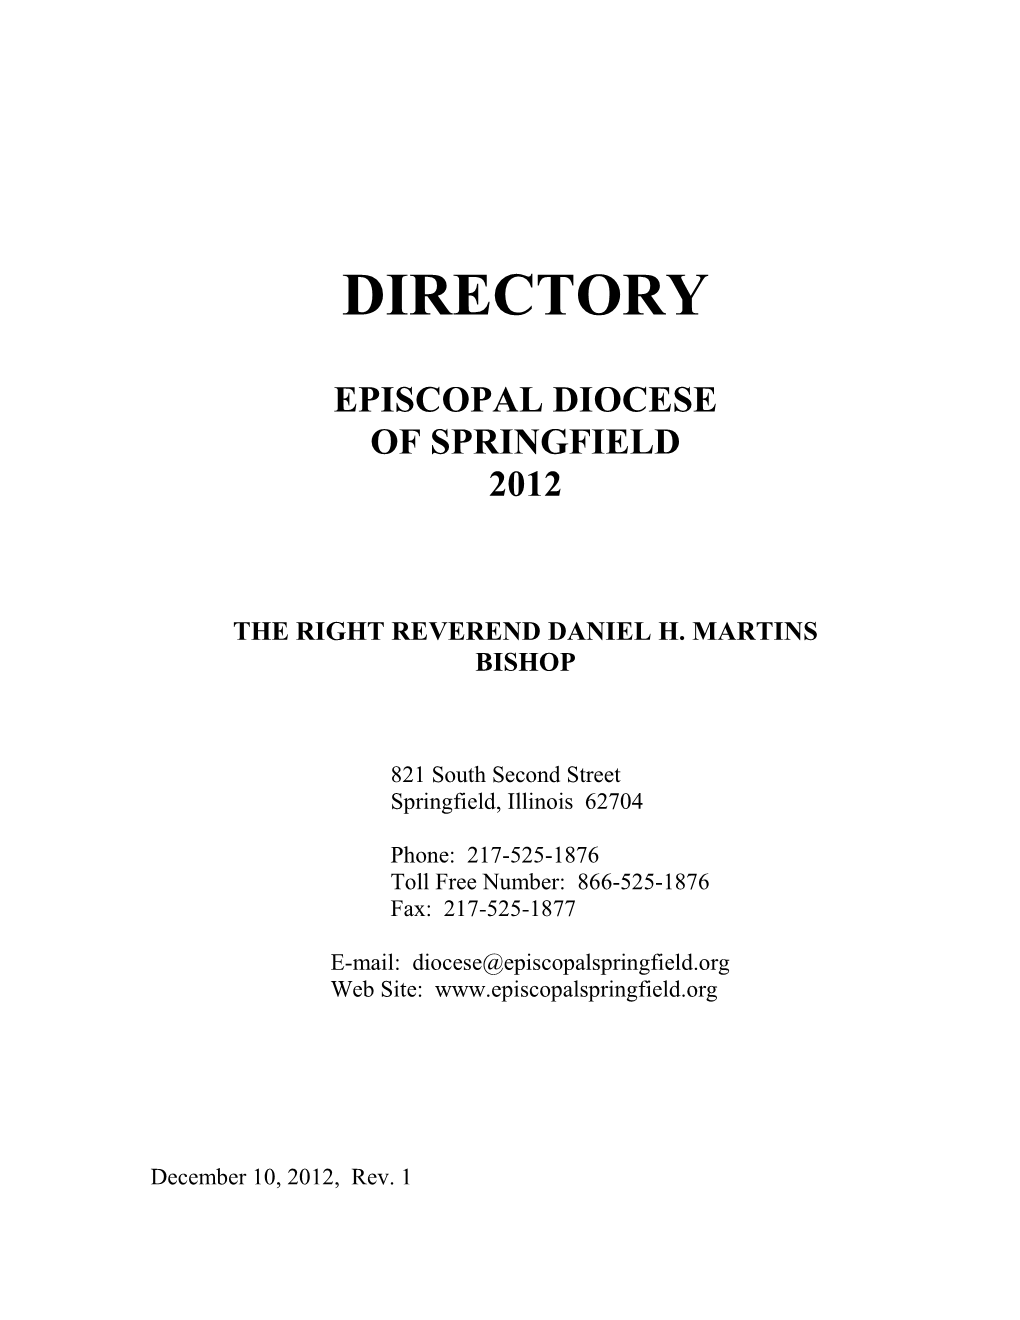 2004 Directory